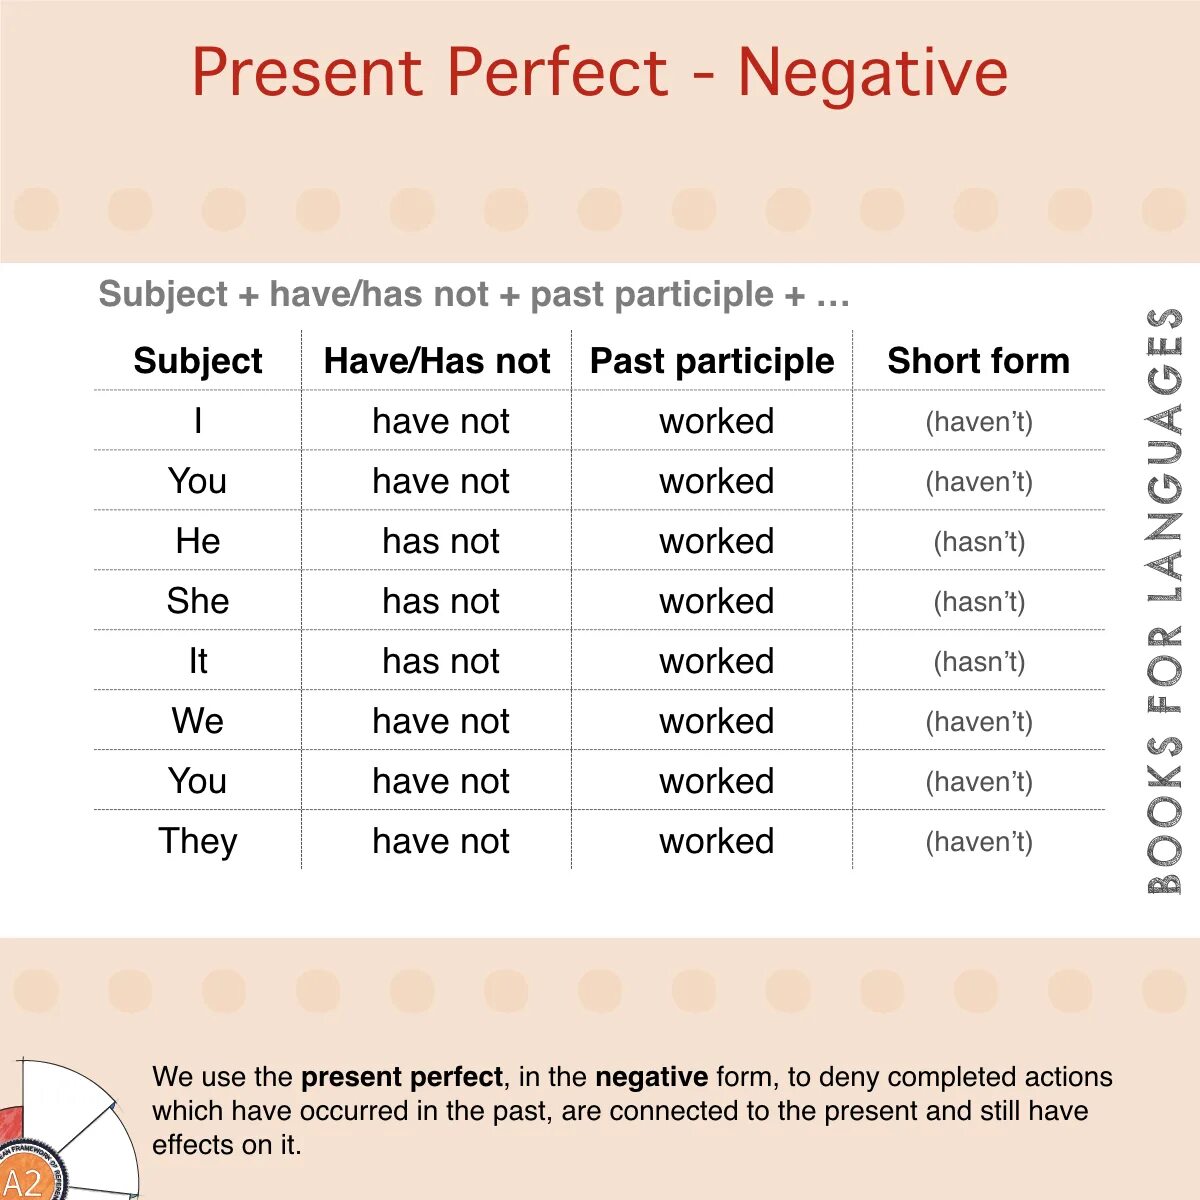 Present perfect negative. Present perfect negative form. Past perfect negative. Презент Перфект негатив. Use the present perfect negative